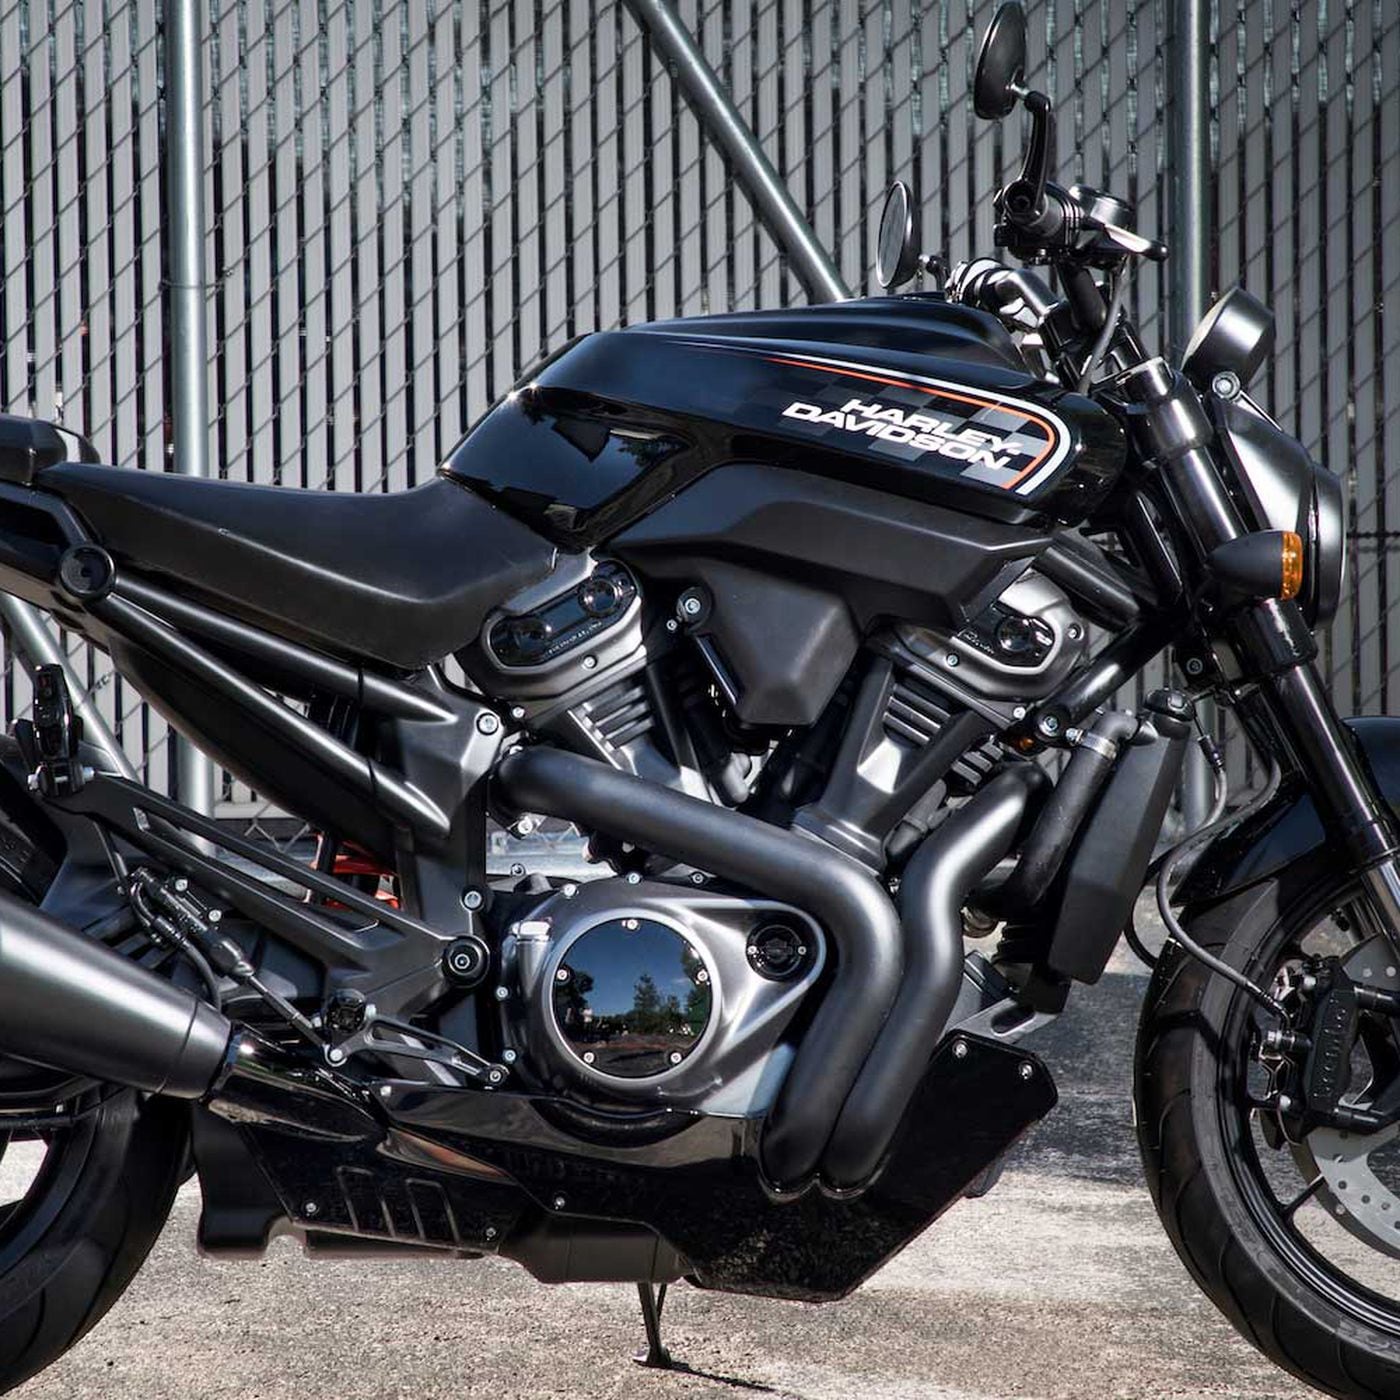 2020 Harley-Davidson Streetfighter Preview